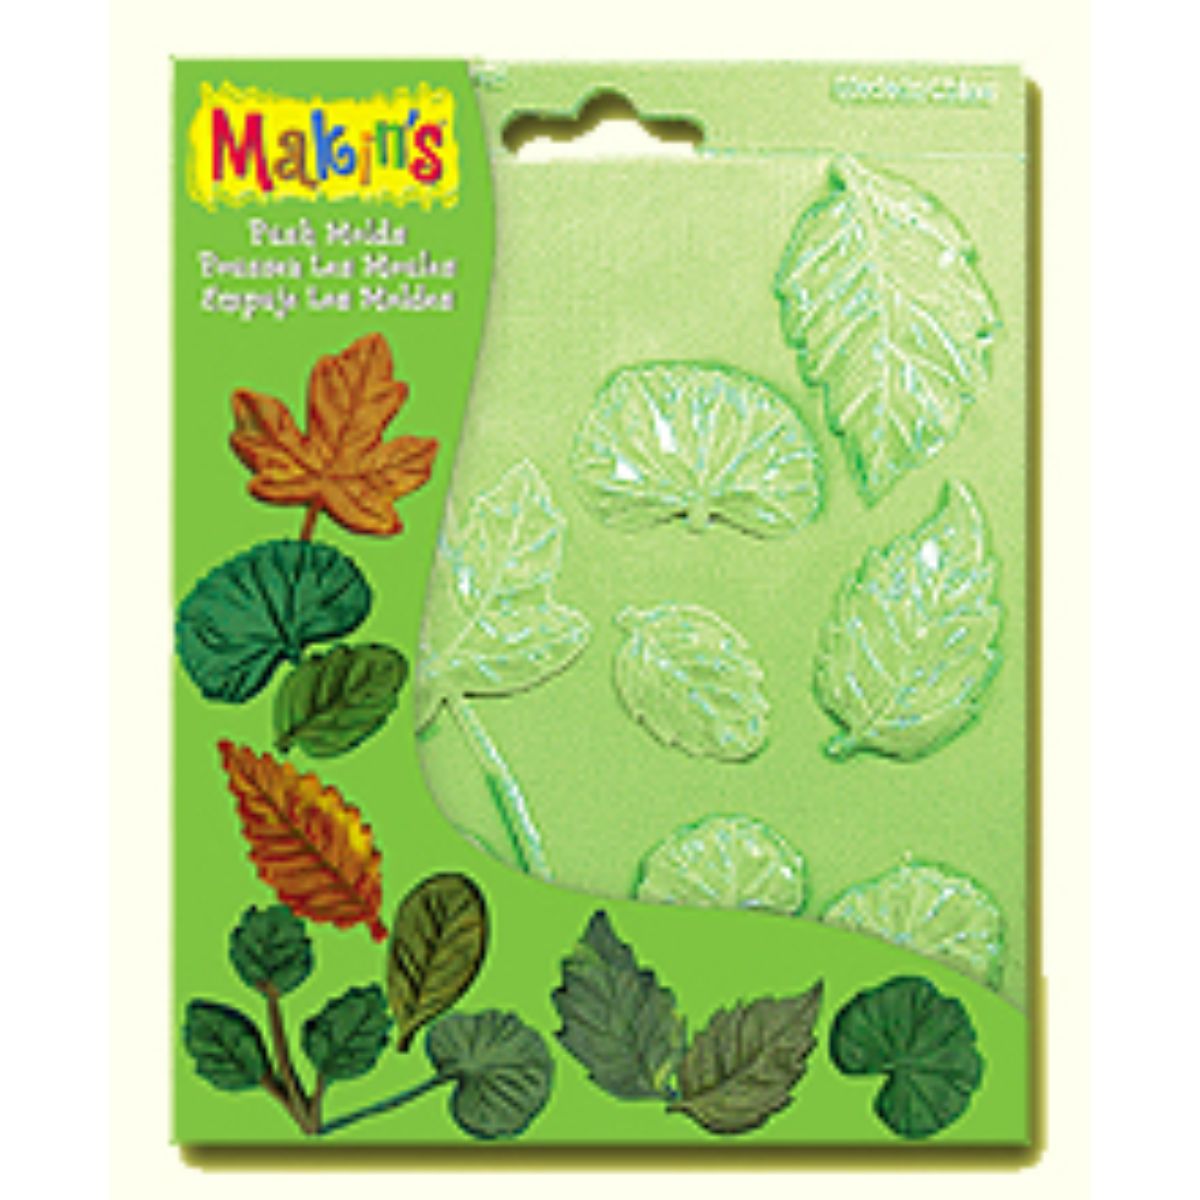 Makin's Push Mold Leaf